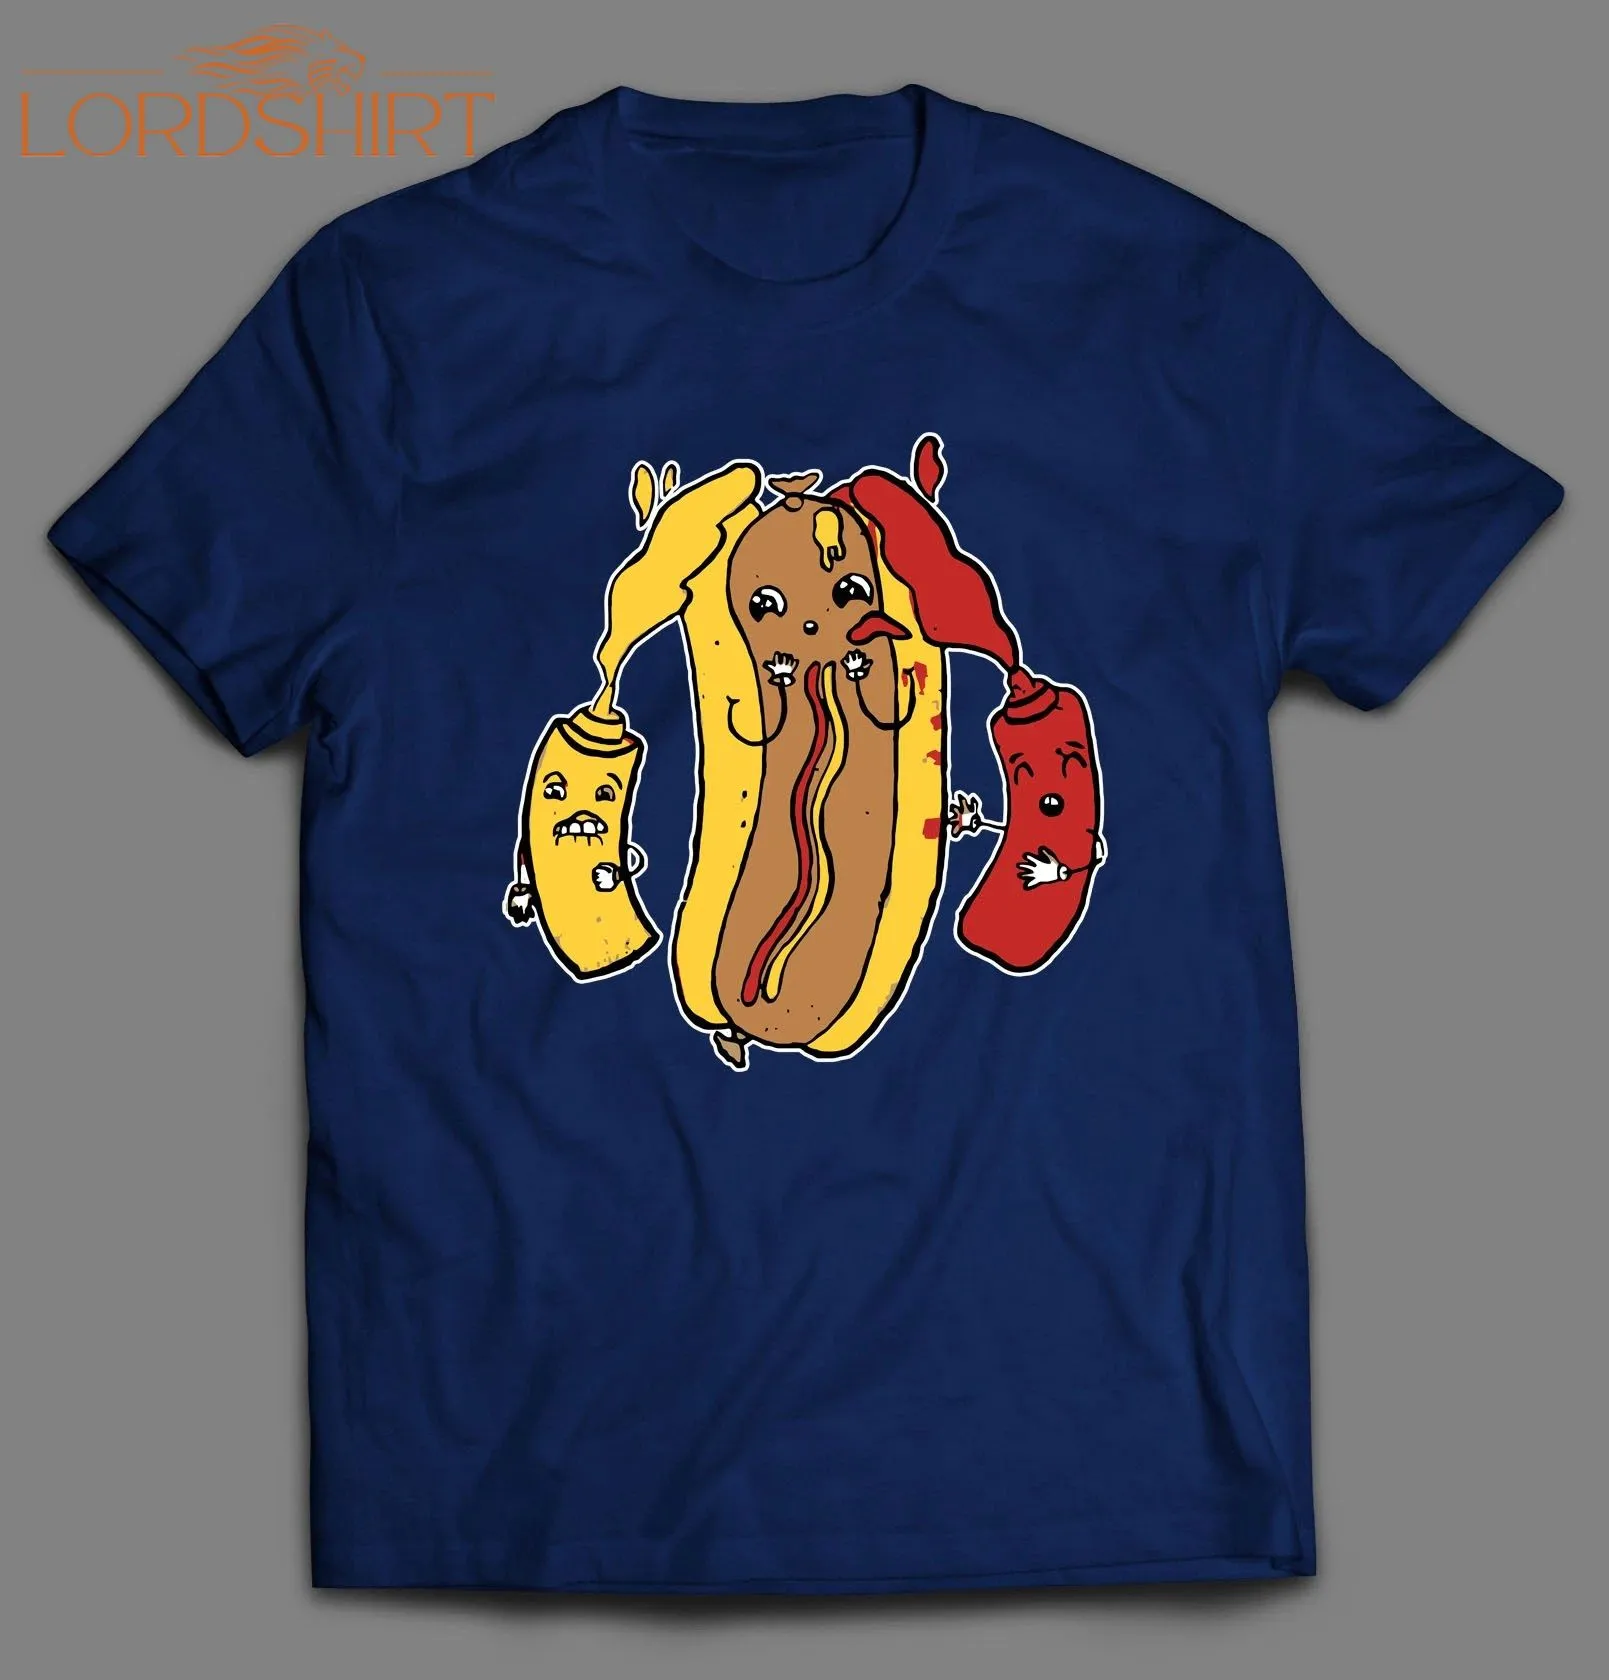 Hotdog Triple X Adult Humor Shirt